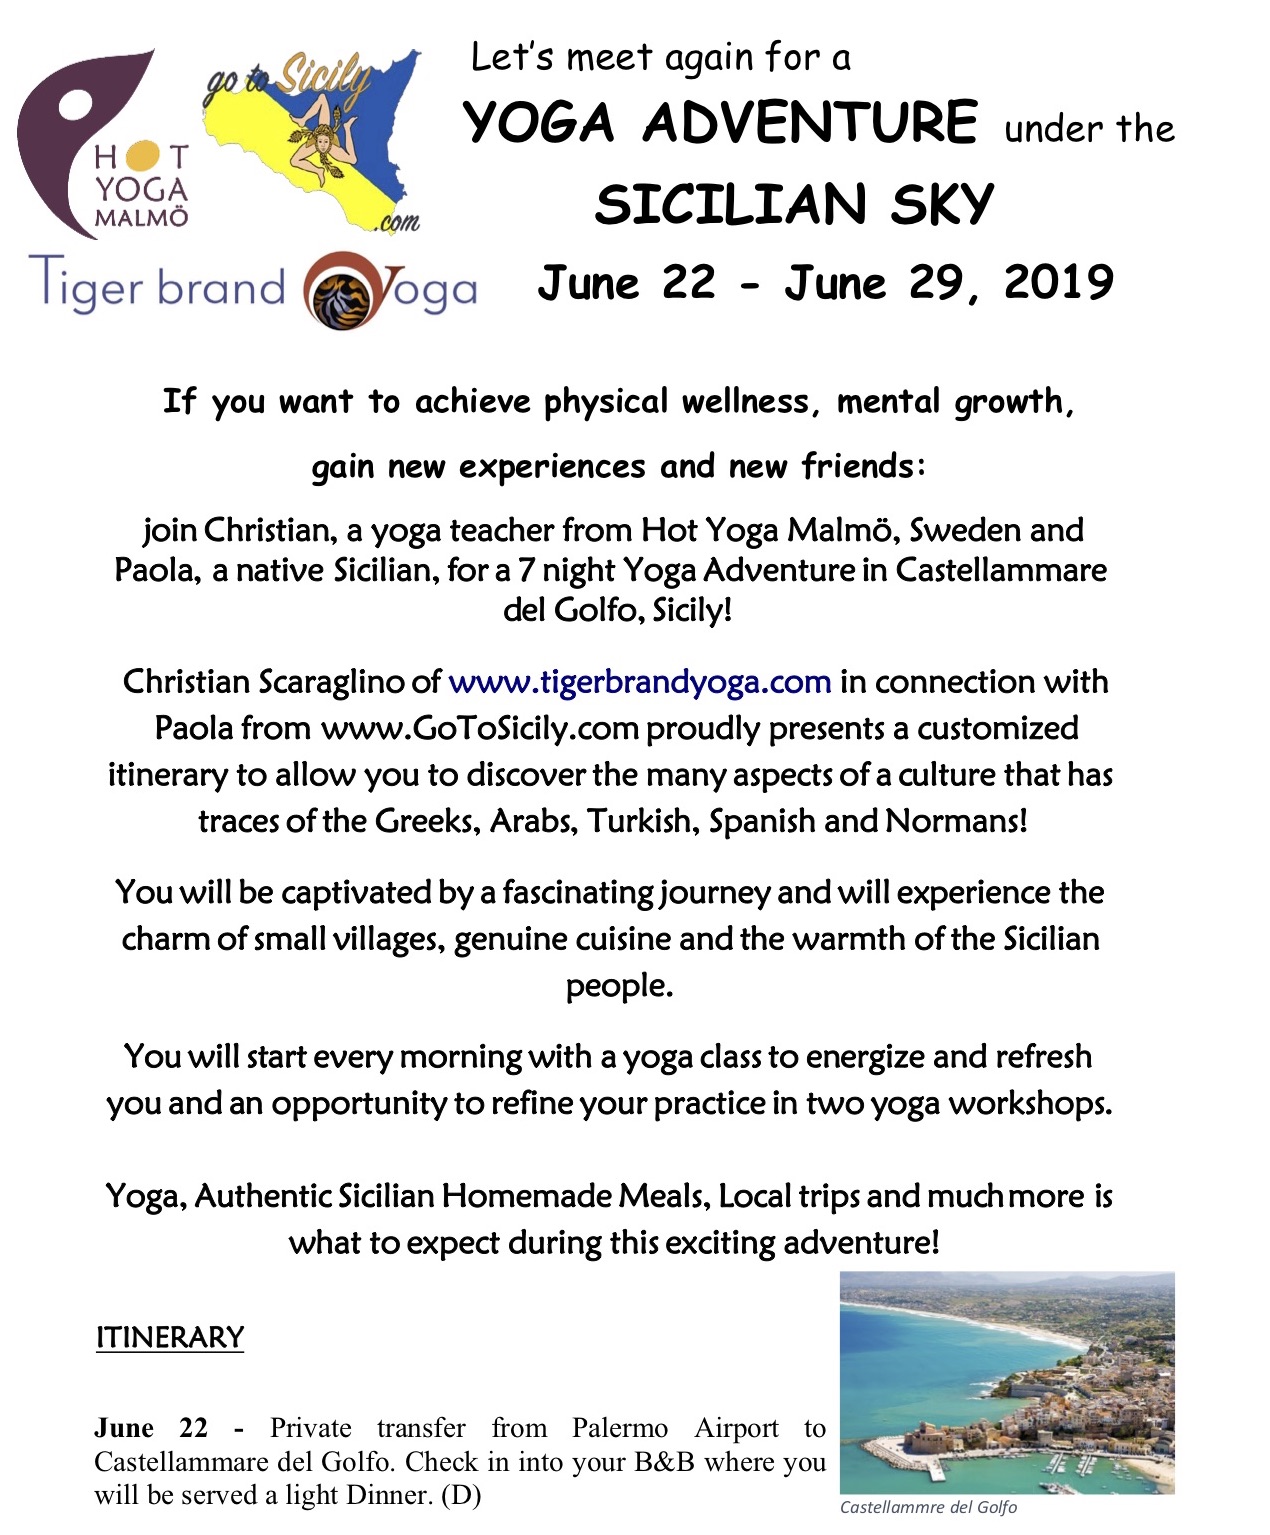 2nd Annual Yoga Adventure under the Sicilian Sky